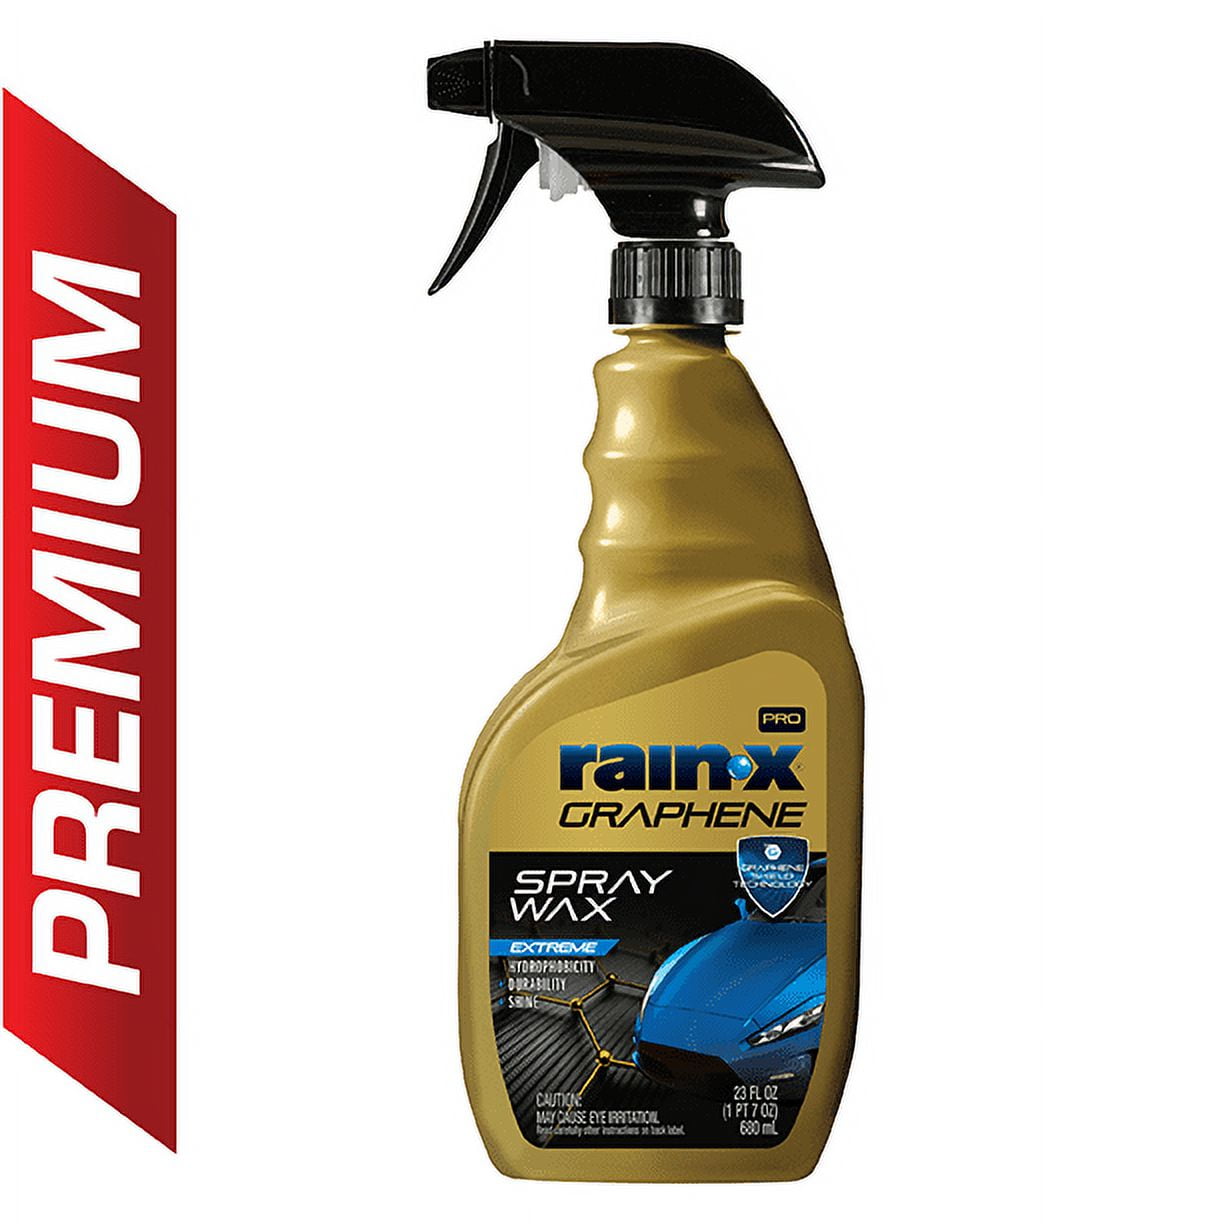 Rain-X® -30 Degree De-Icer Windshield Washer Fluid